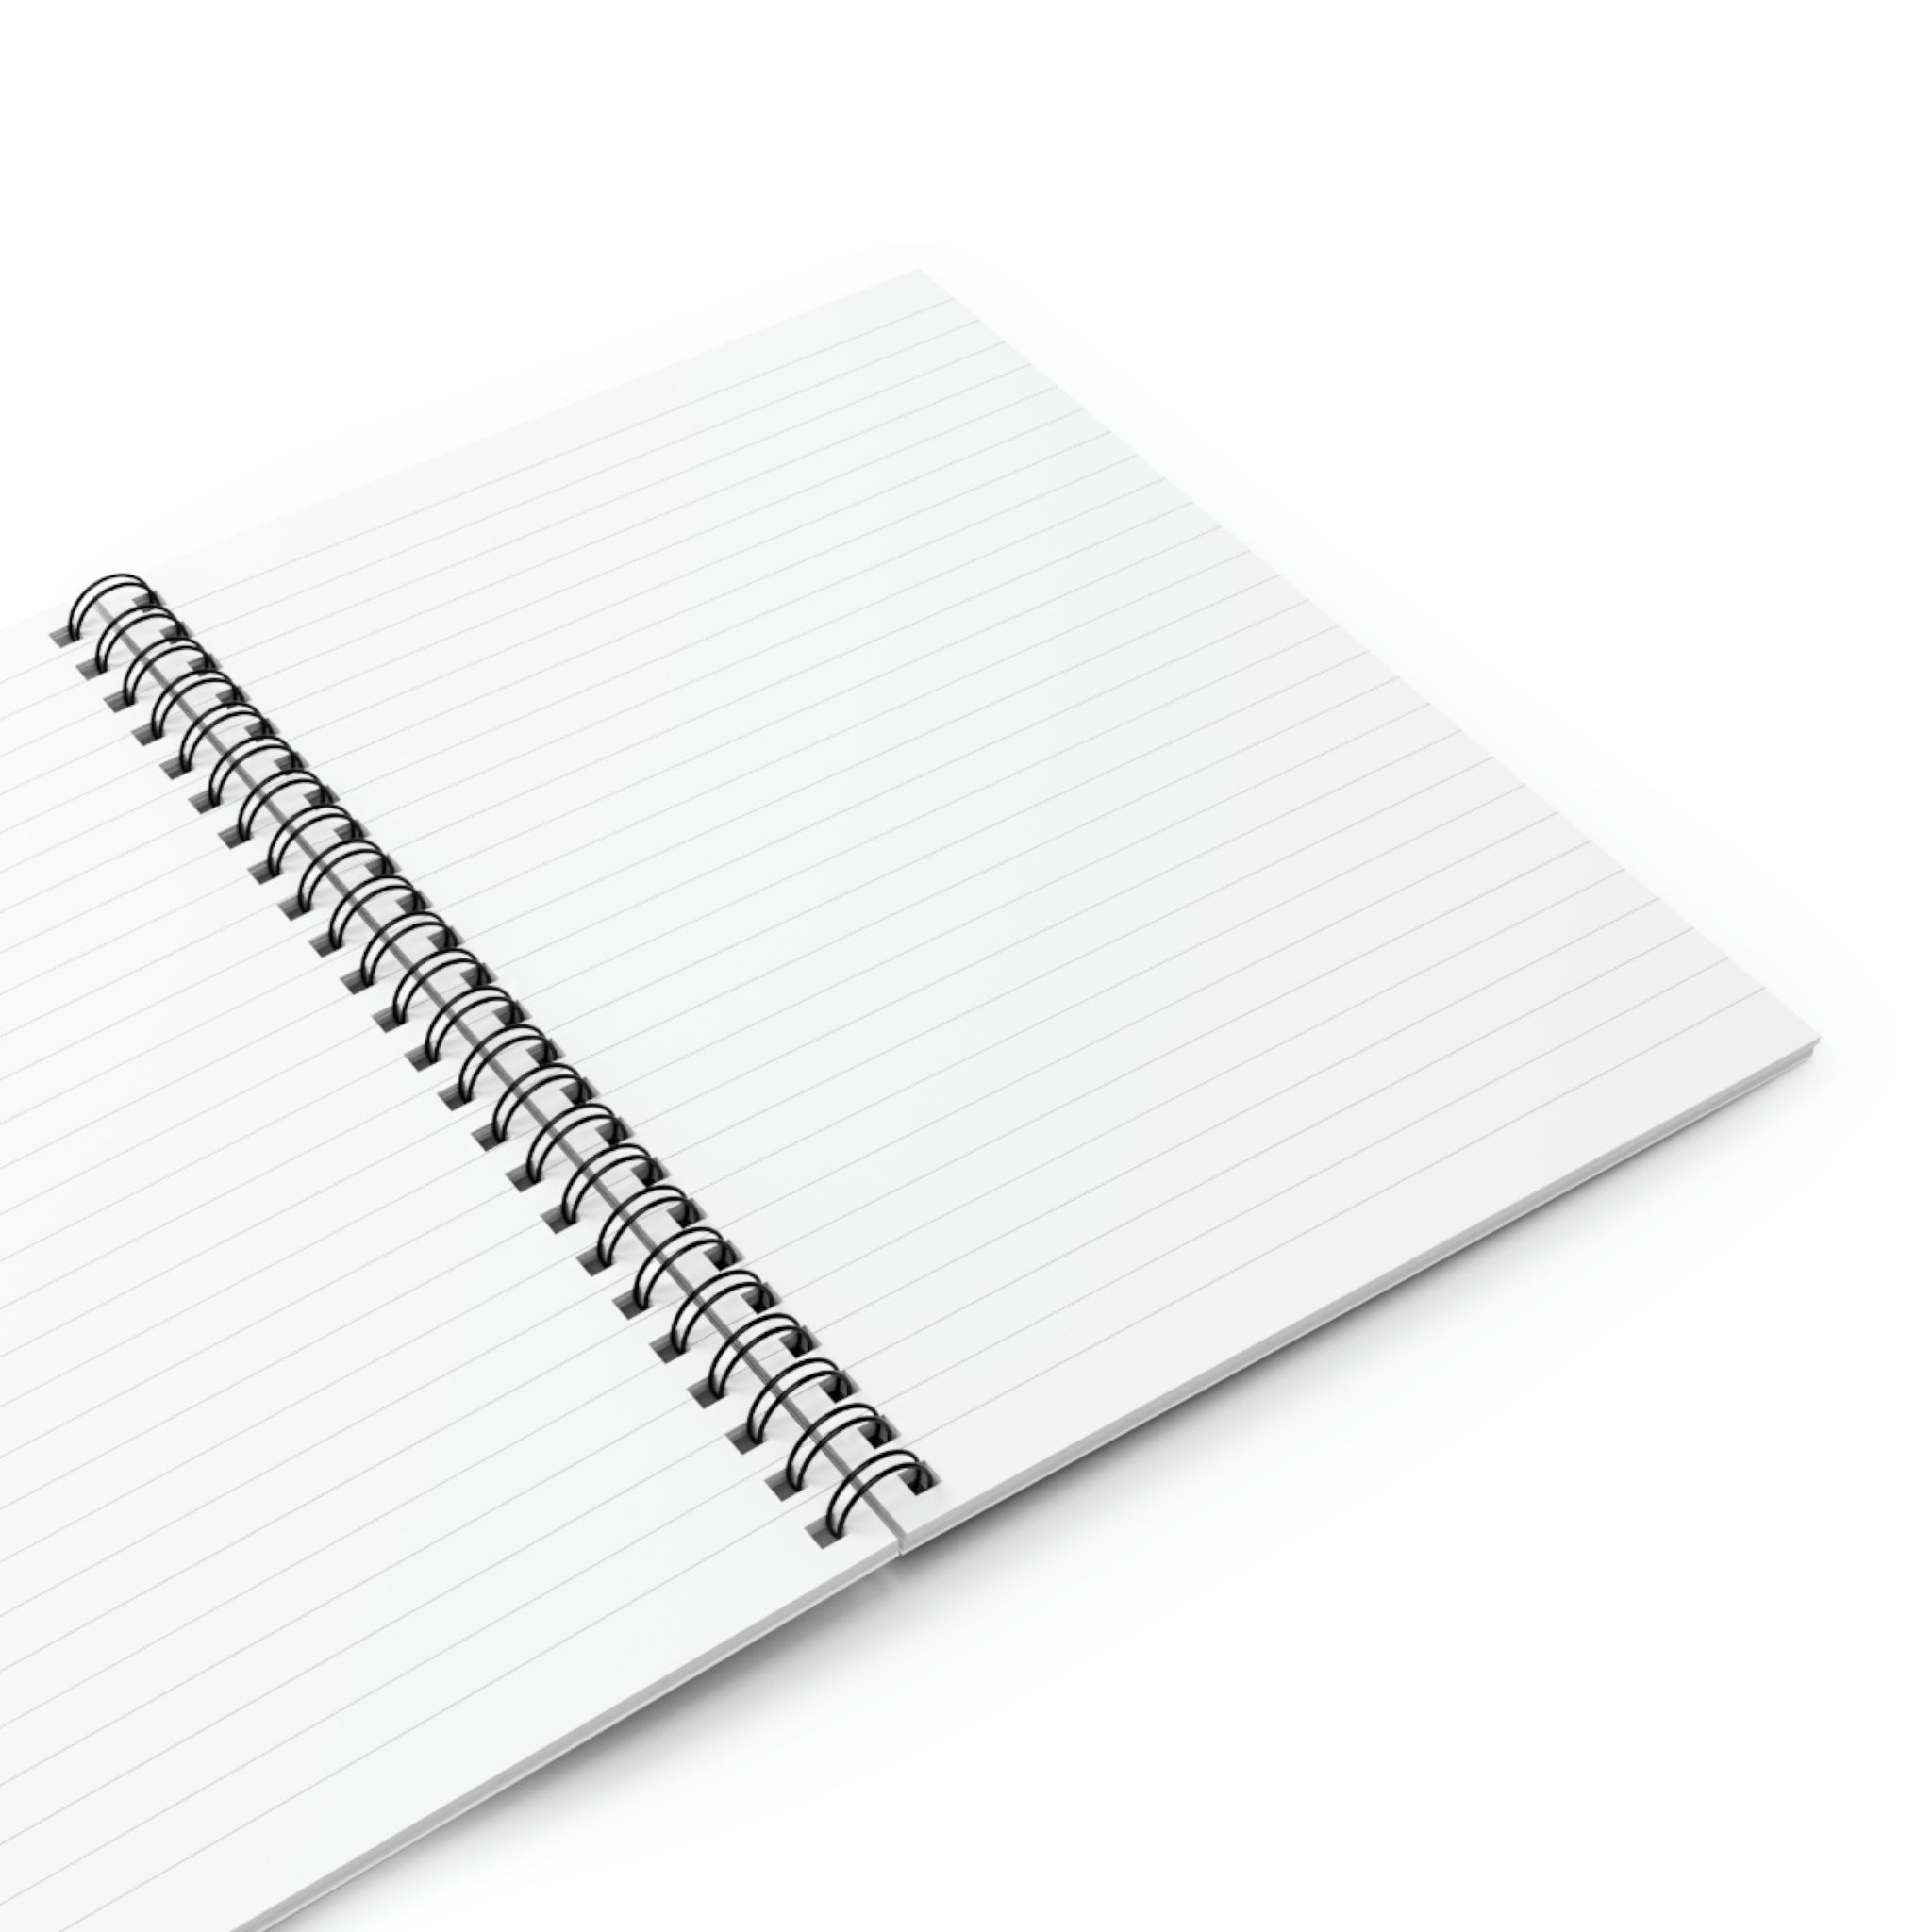 Branding Spiral Notebook - Ruled Line